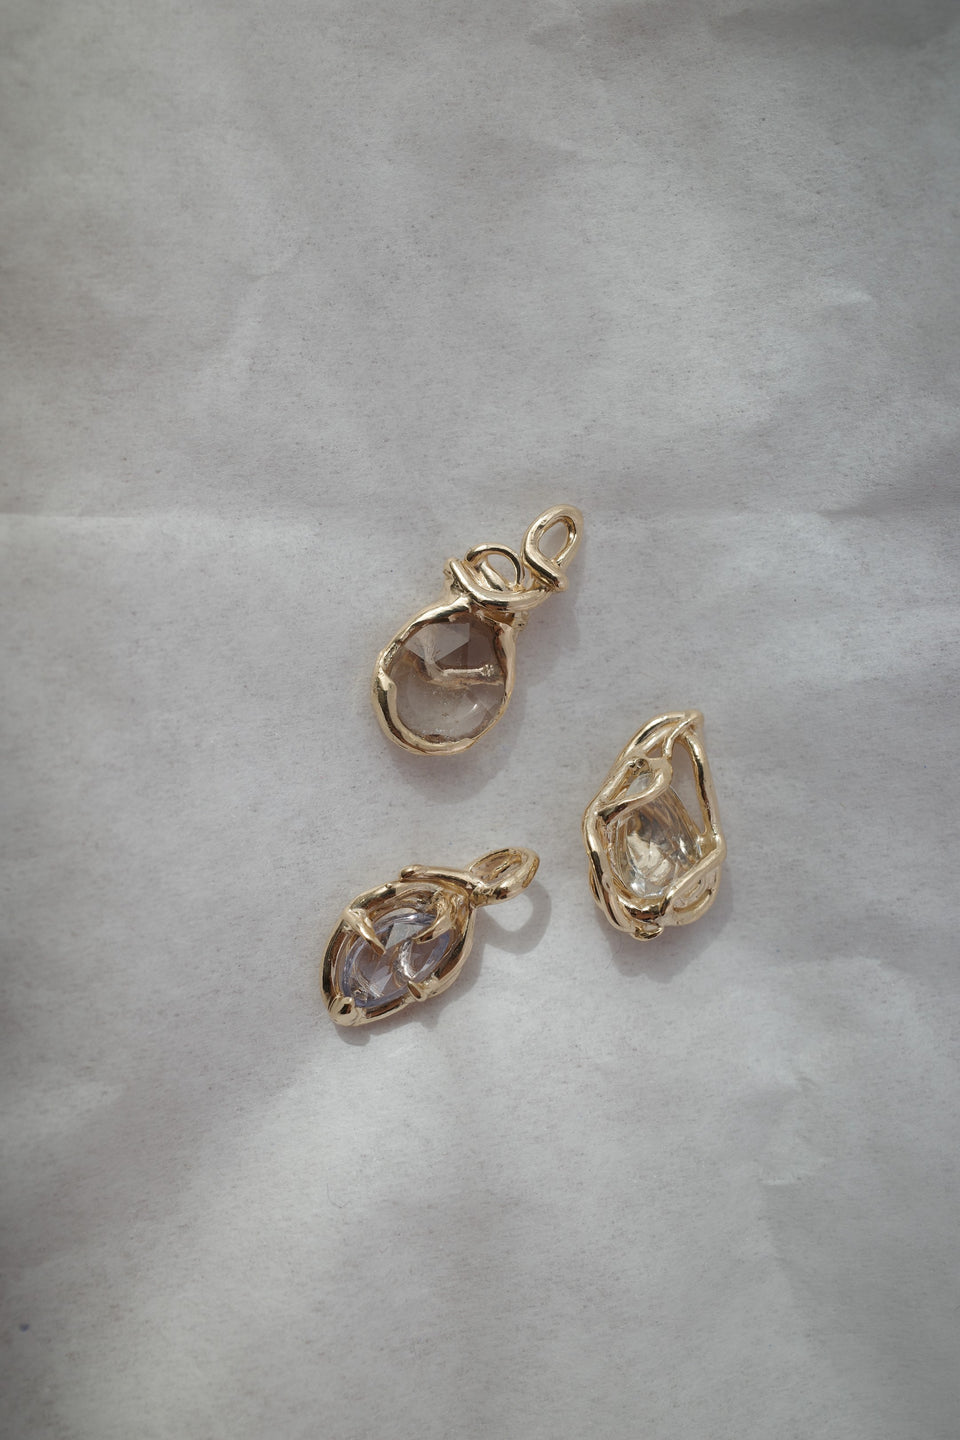 Tempest Pendant Necklaces with Rose Cut Sapphires